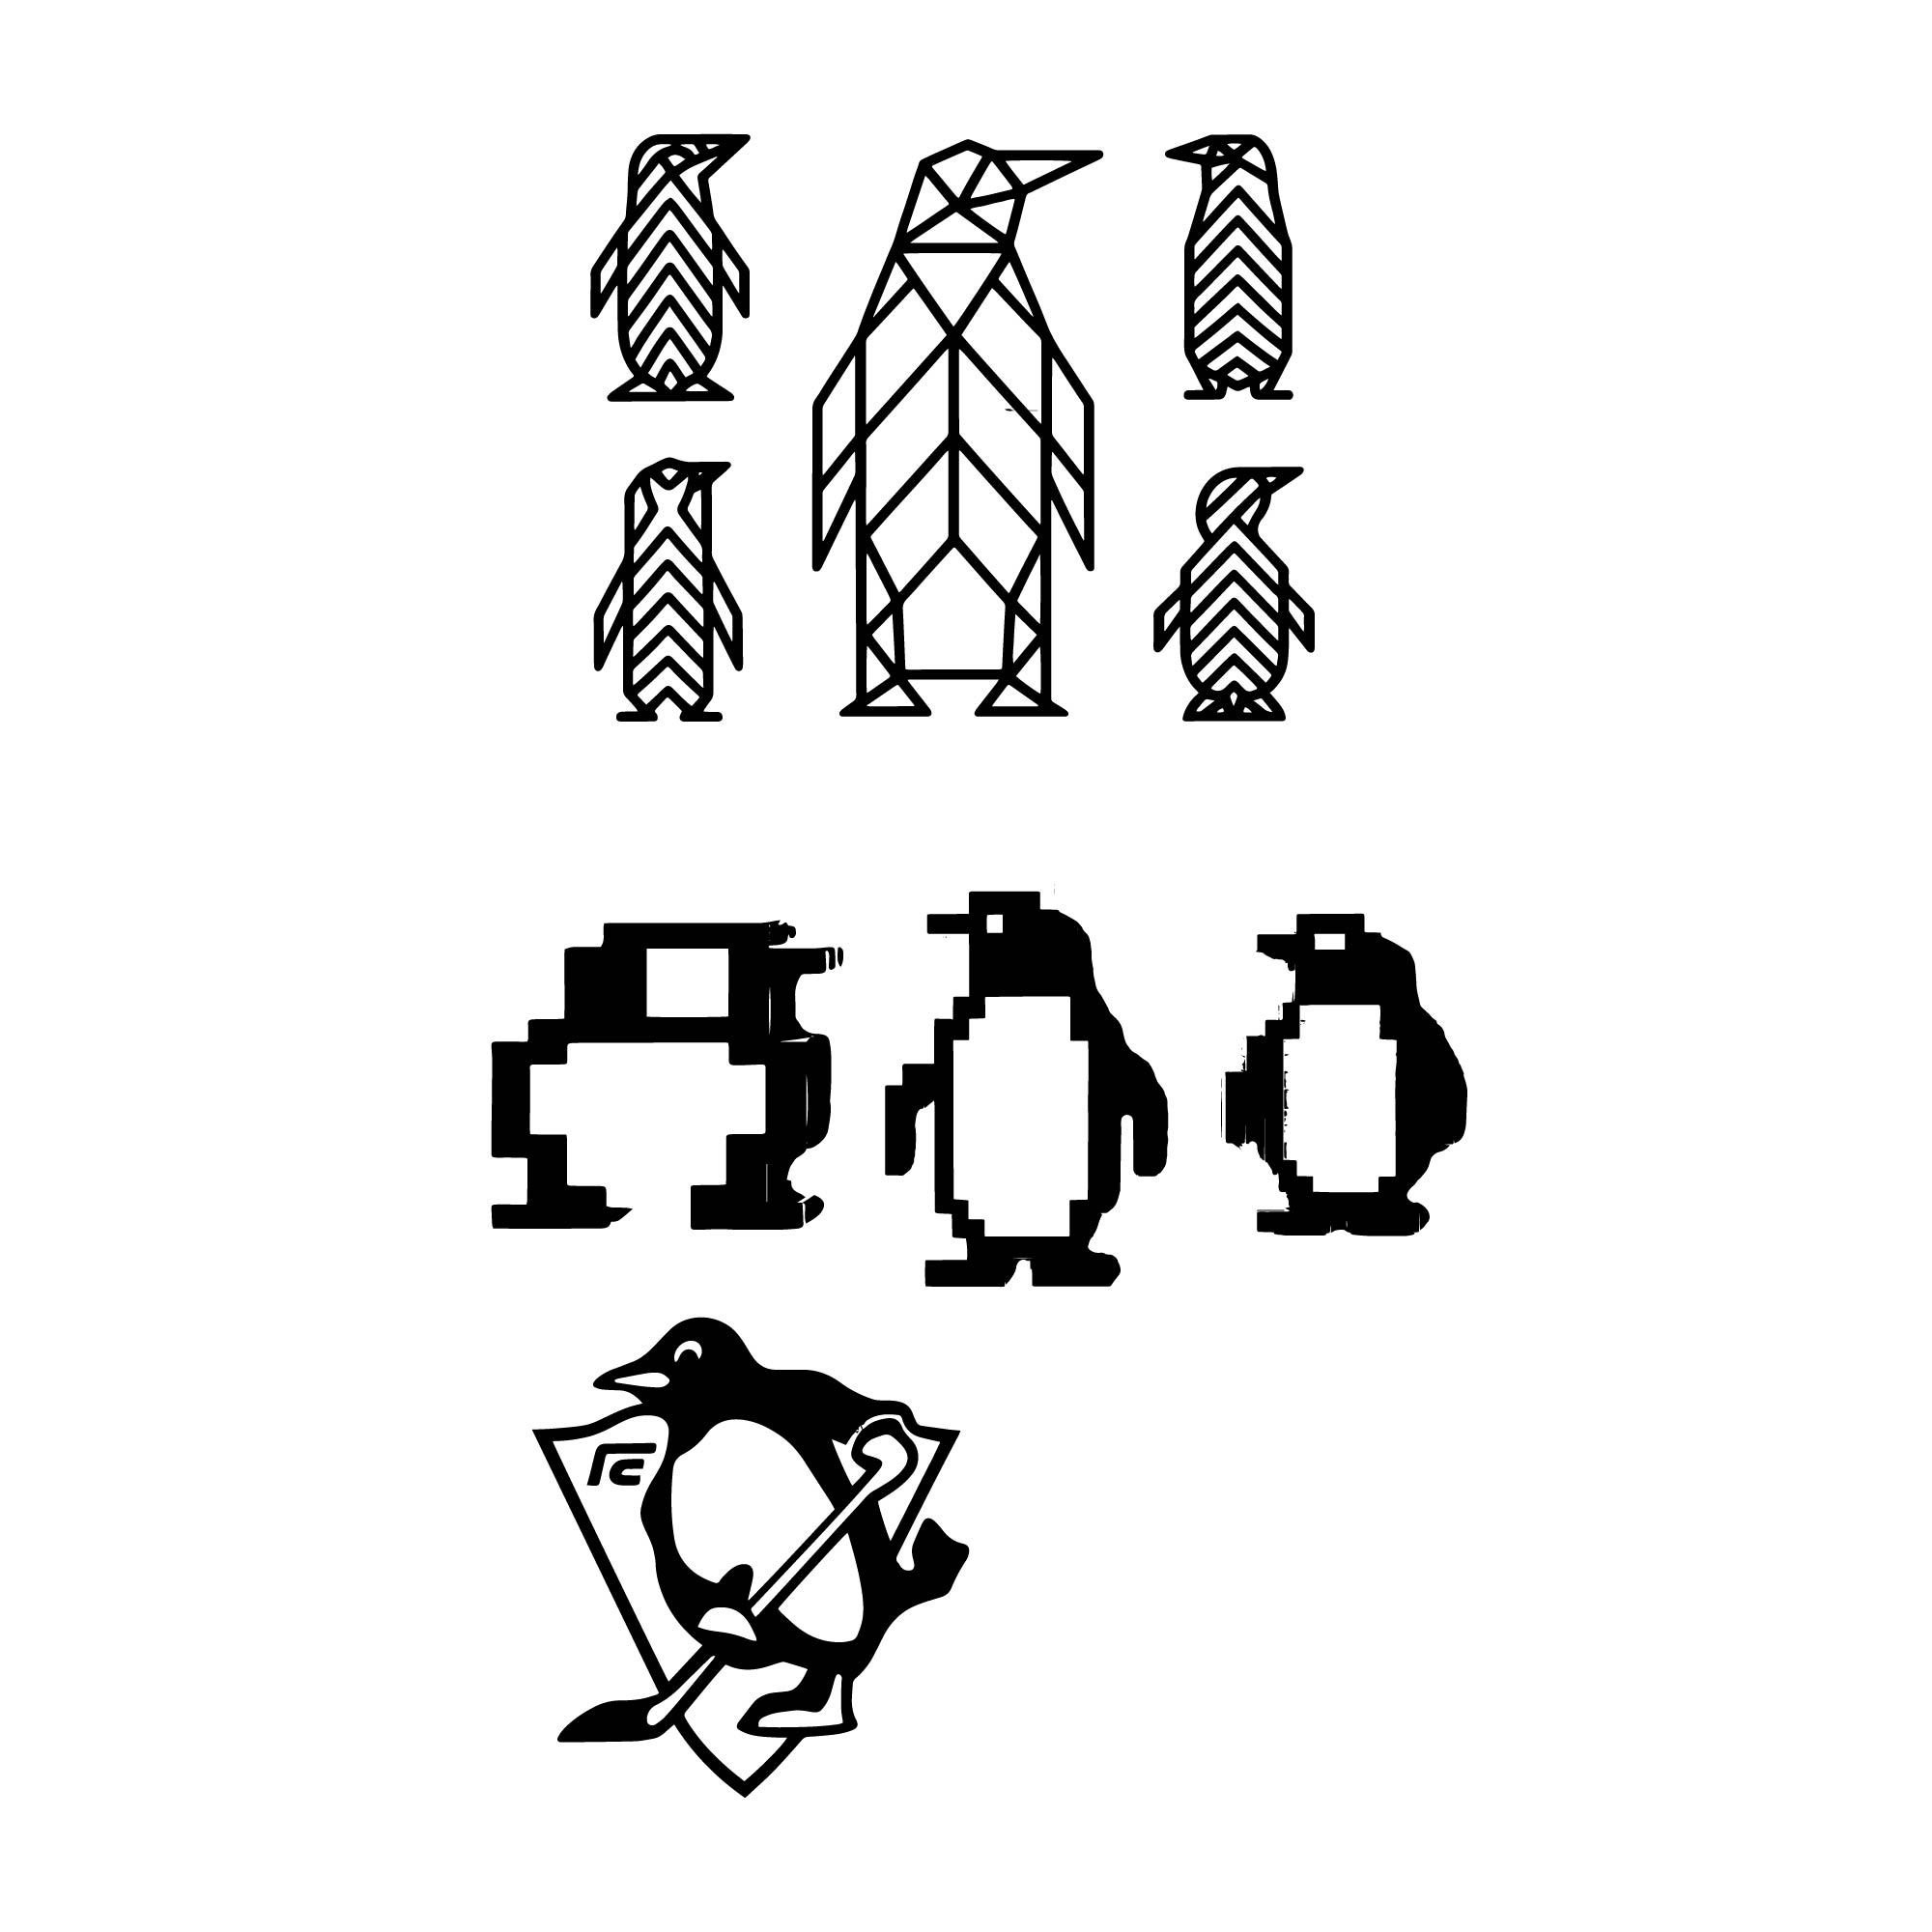 bundles of penguins icons 6 01 923